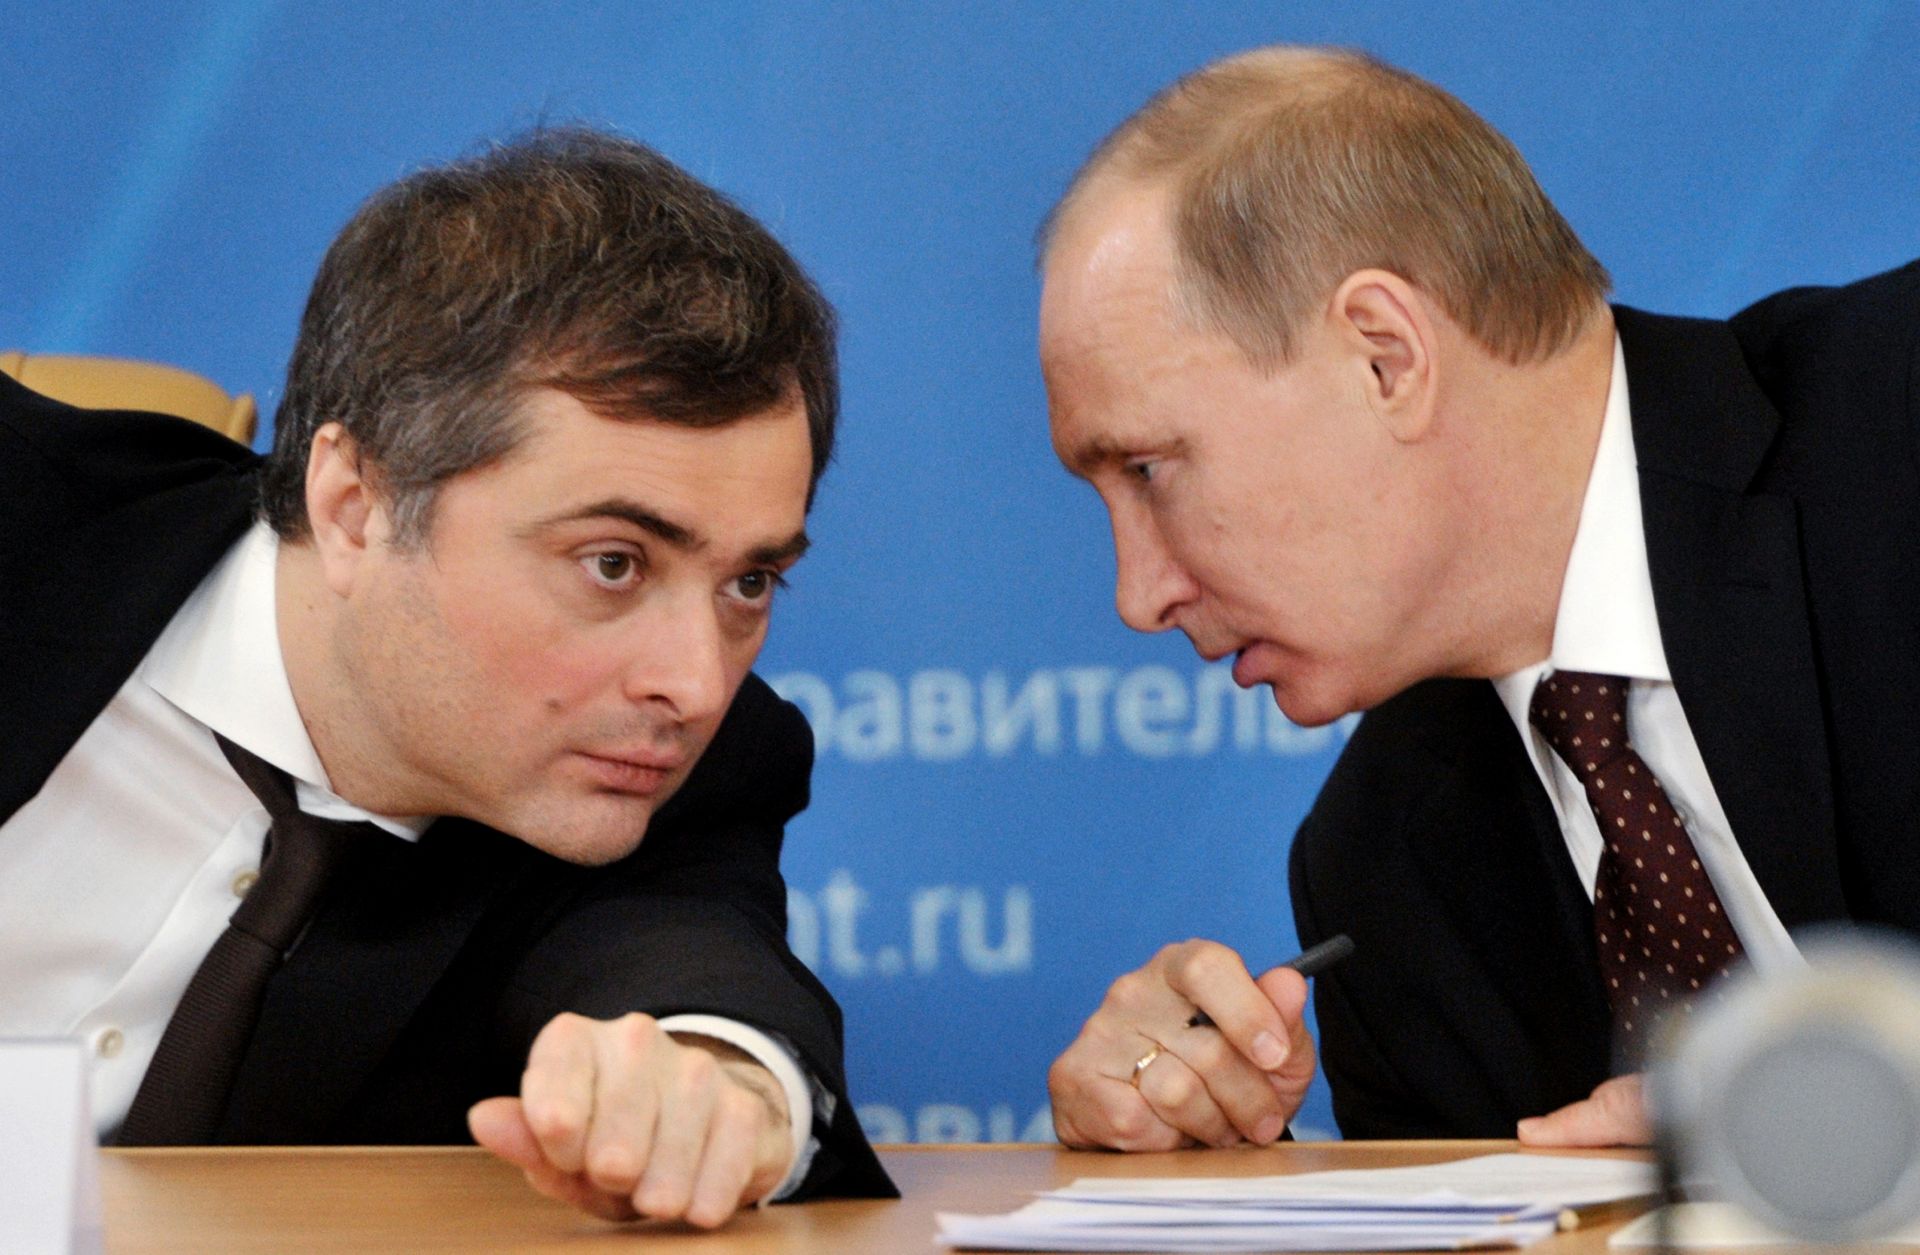 Russia's Prime Minister Vladimir Putin confers with his deputy Vladislav Surkov.